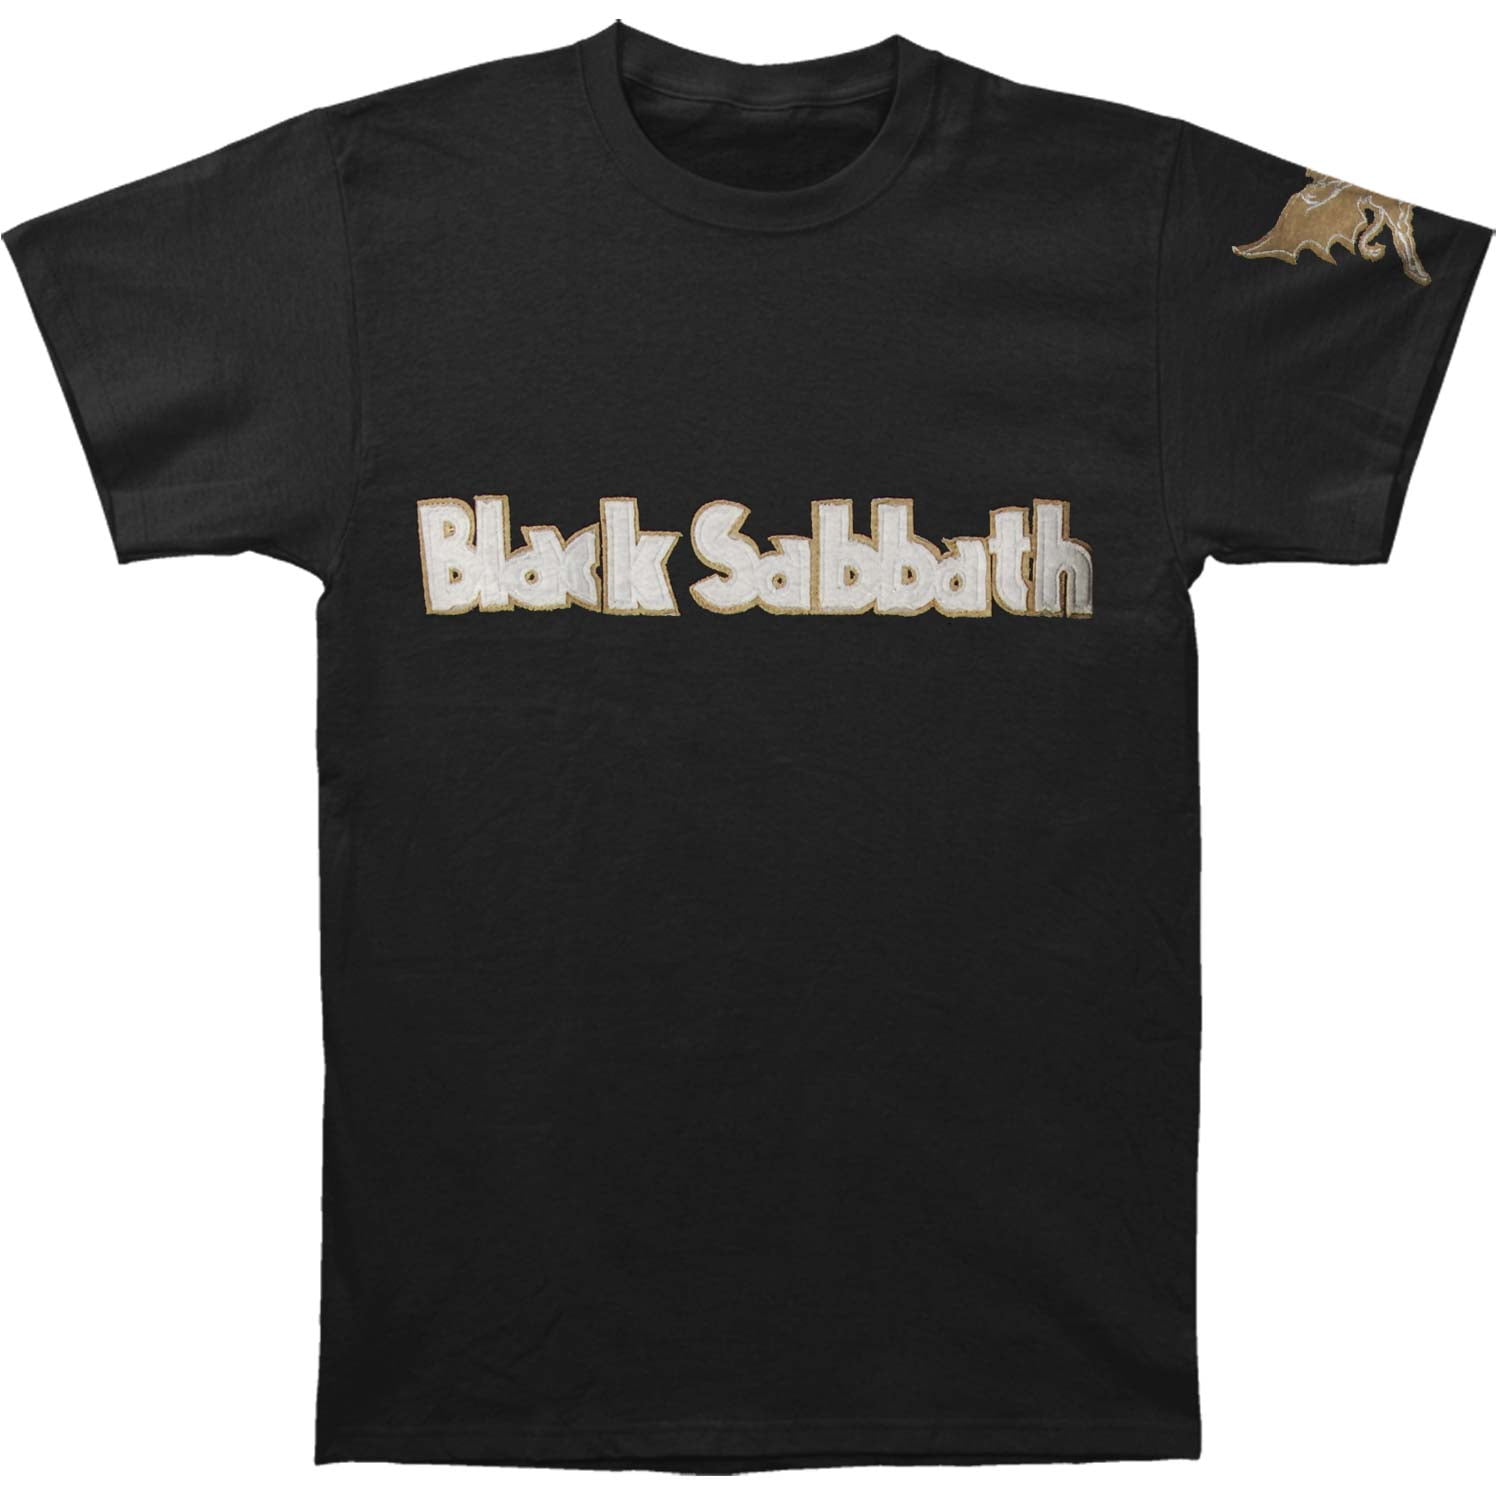 Black Sabbath - Black Sabbath Men's Logo & Daemon Vintage T-shirt Black ...